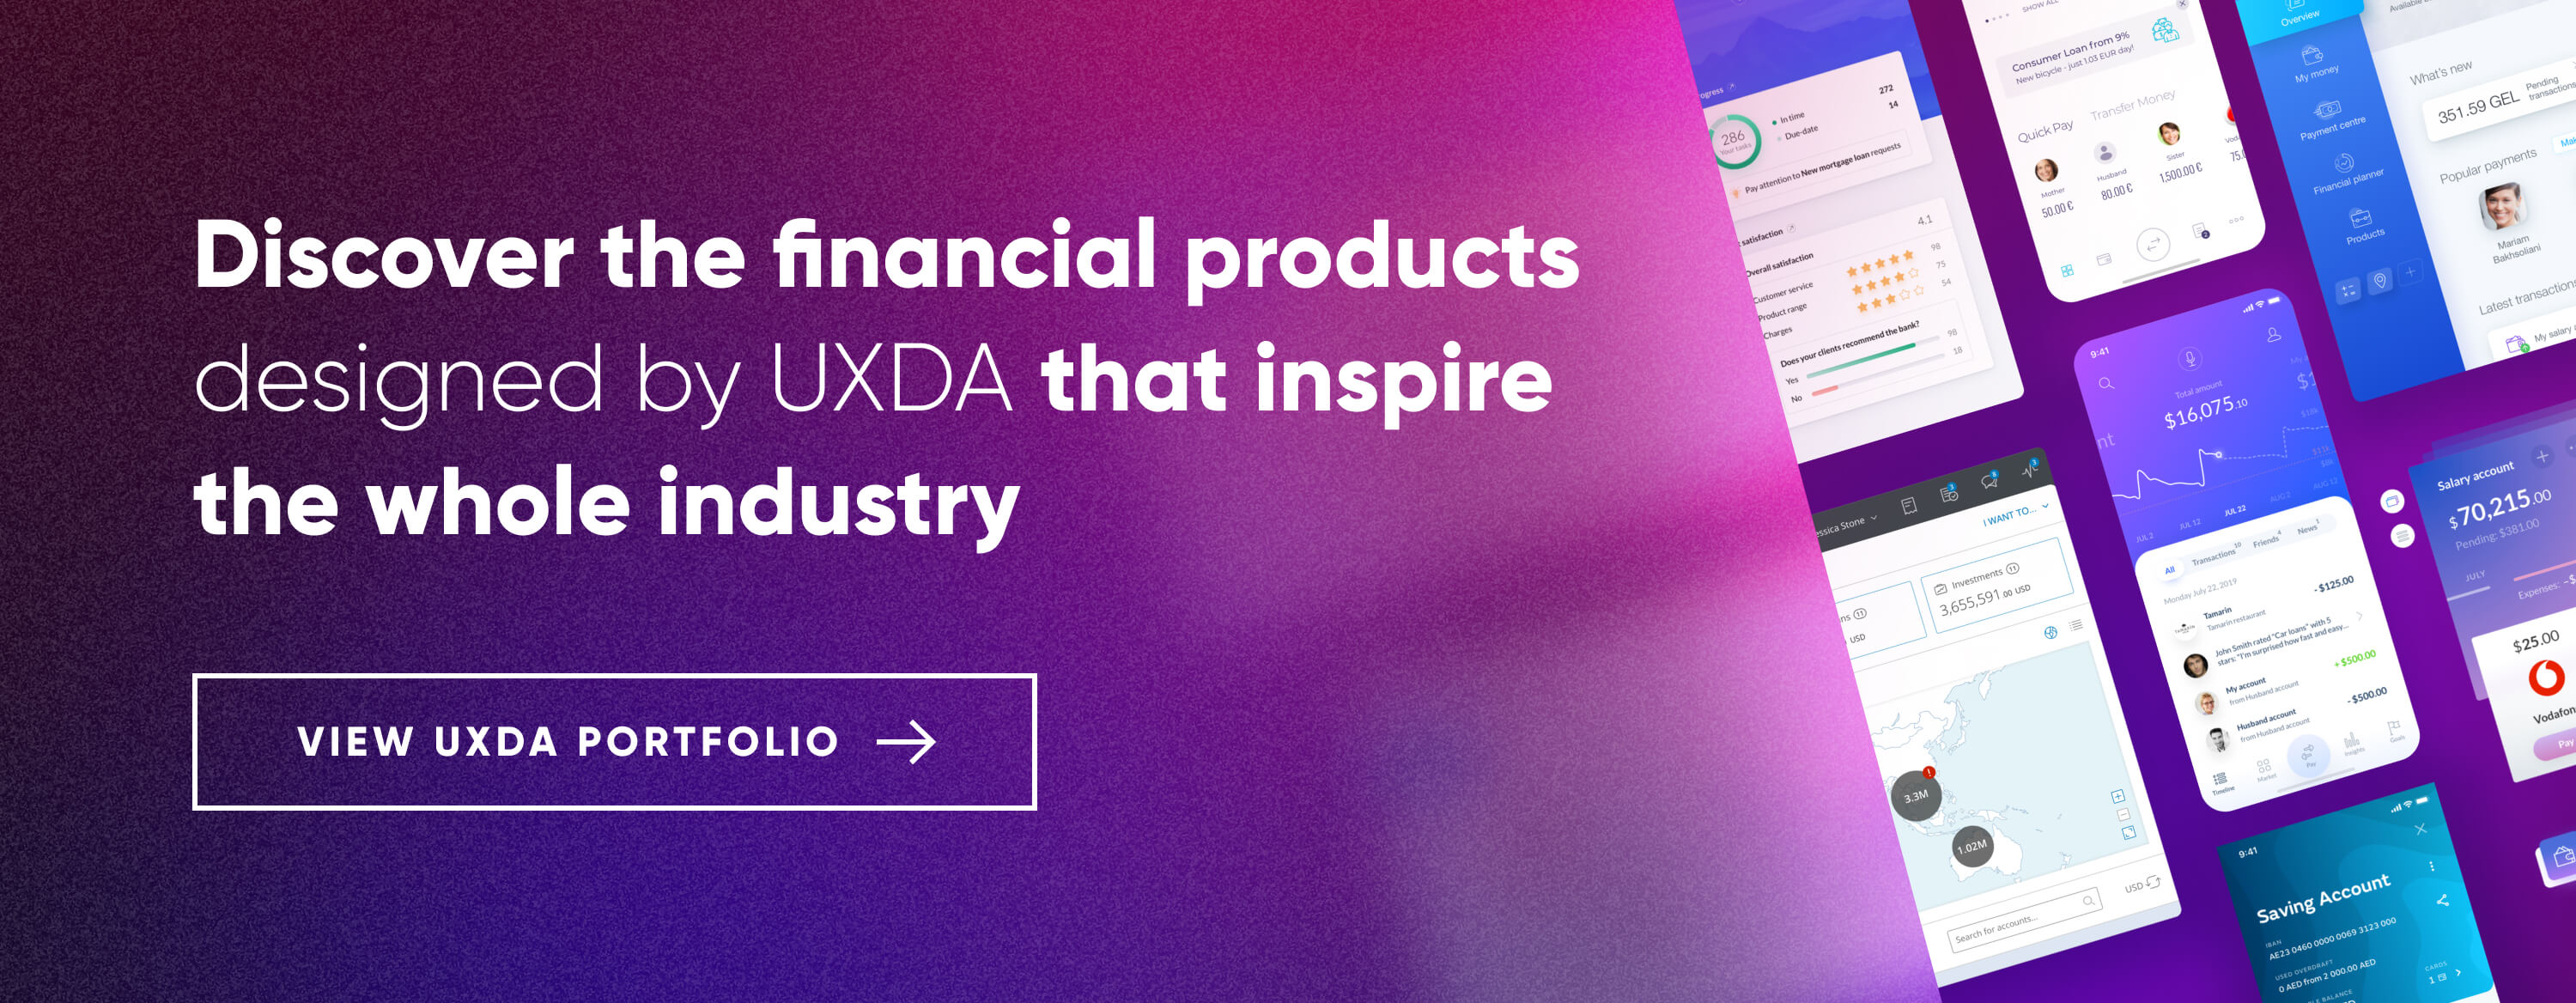 uxda-portfolio-financial-digital-product-inspire-industry-ux-1669633090.jpg